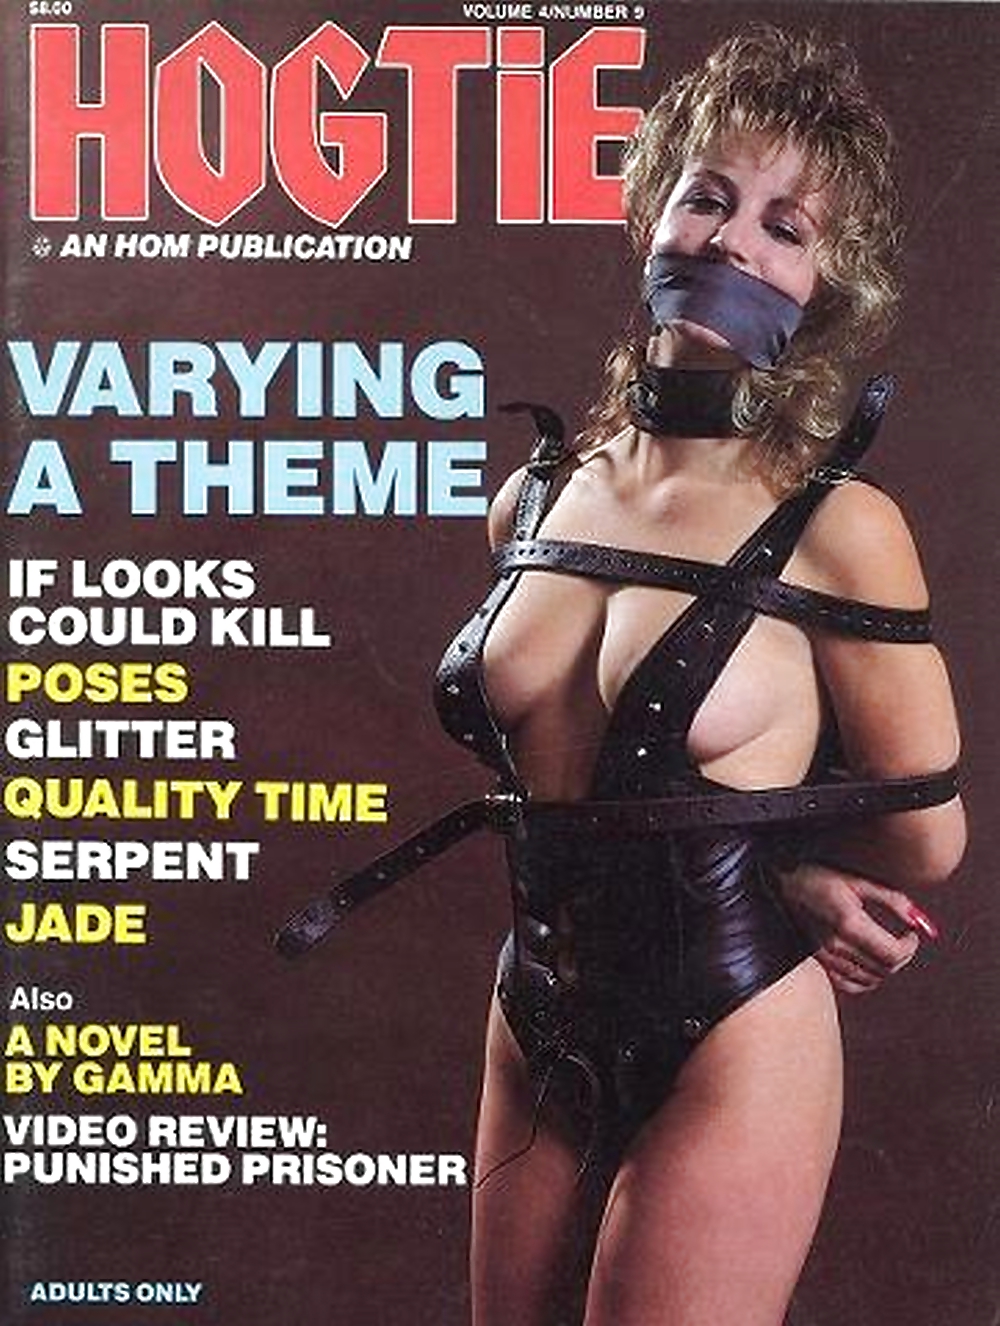 Le mie riviste bondage d'epoca (copertine) parte 3
 #24512737